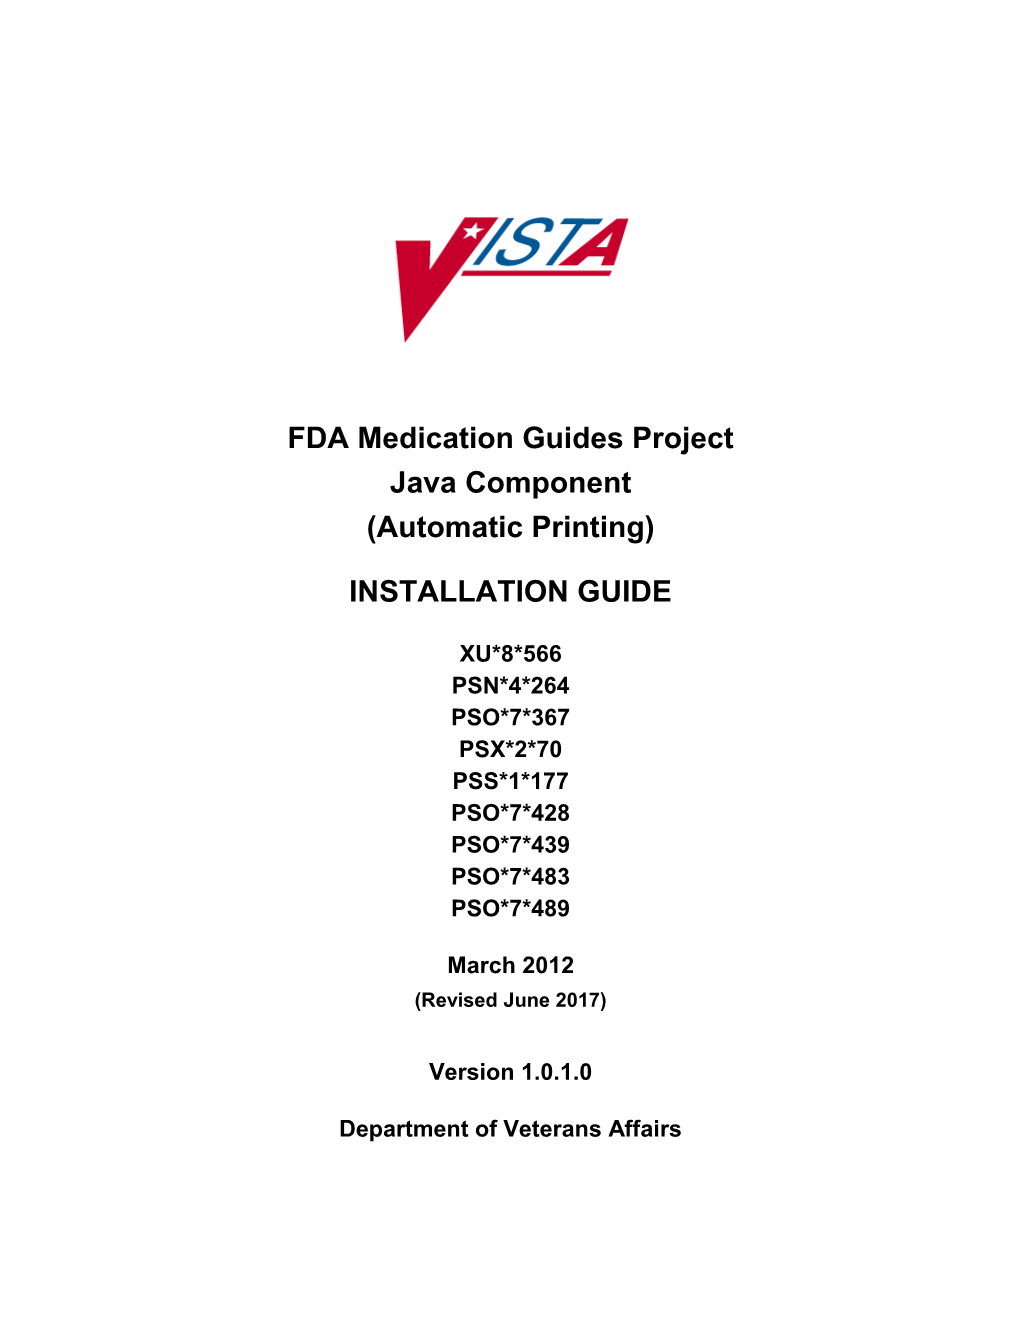 FDA Med Guides Java Component Installation Guide